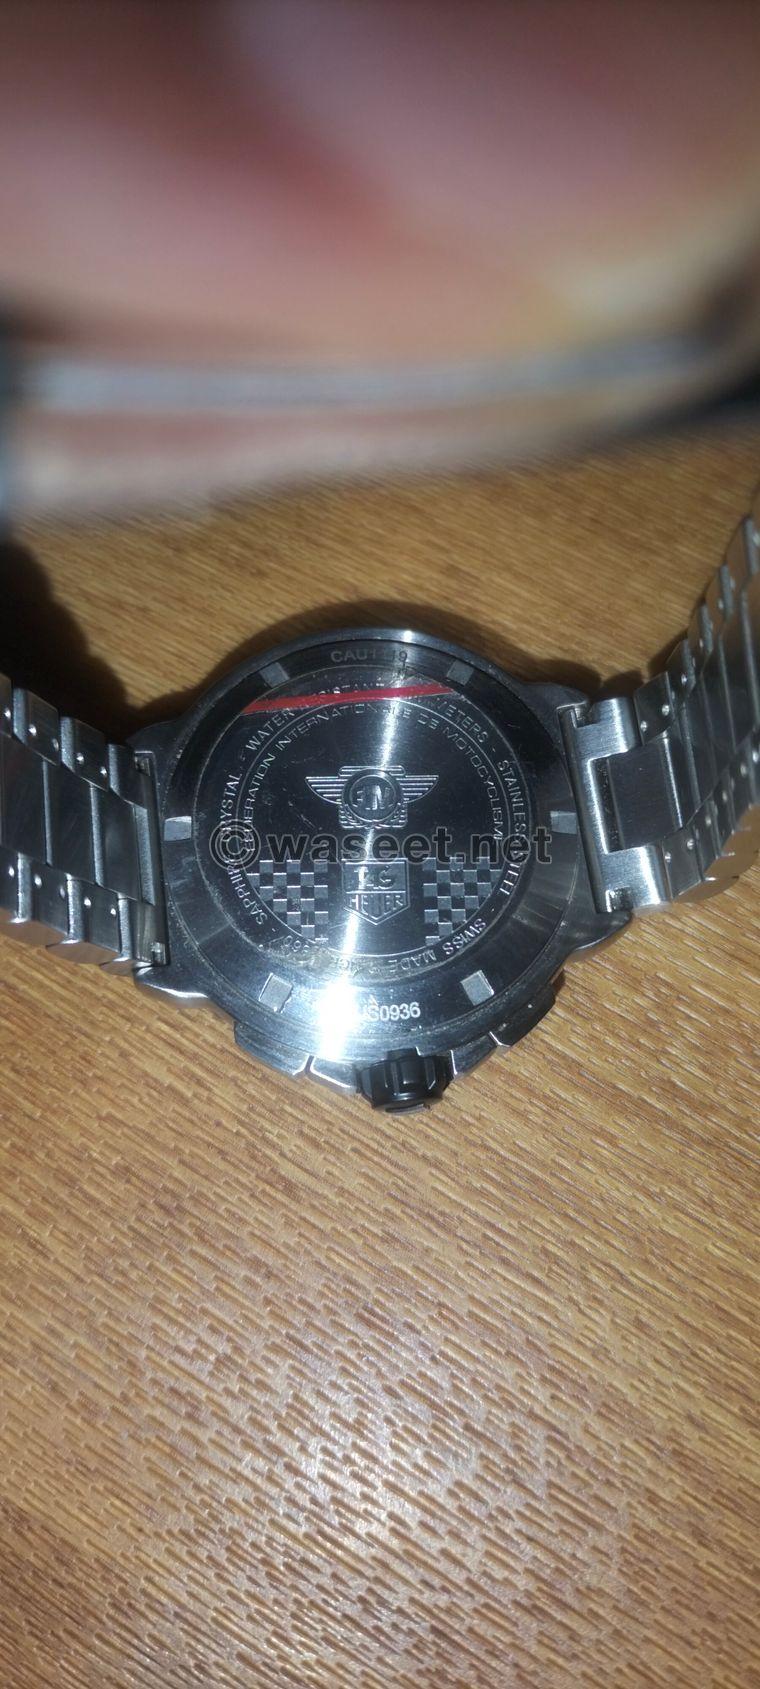 Used men's wristwatch 1